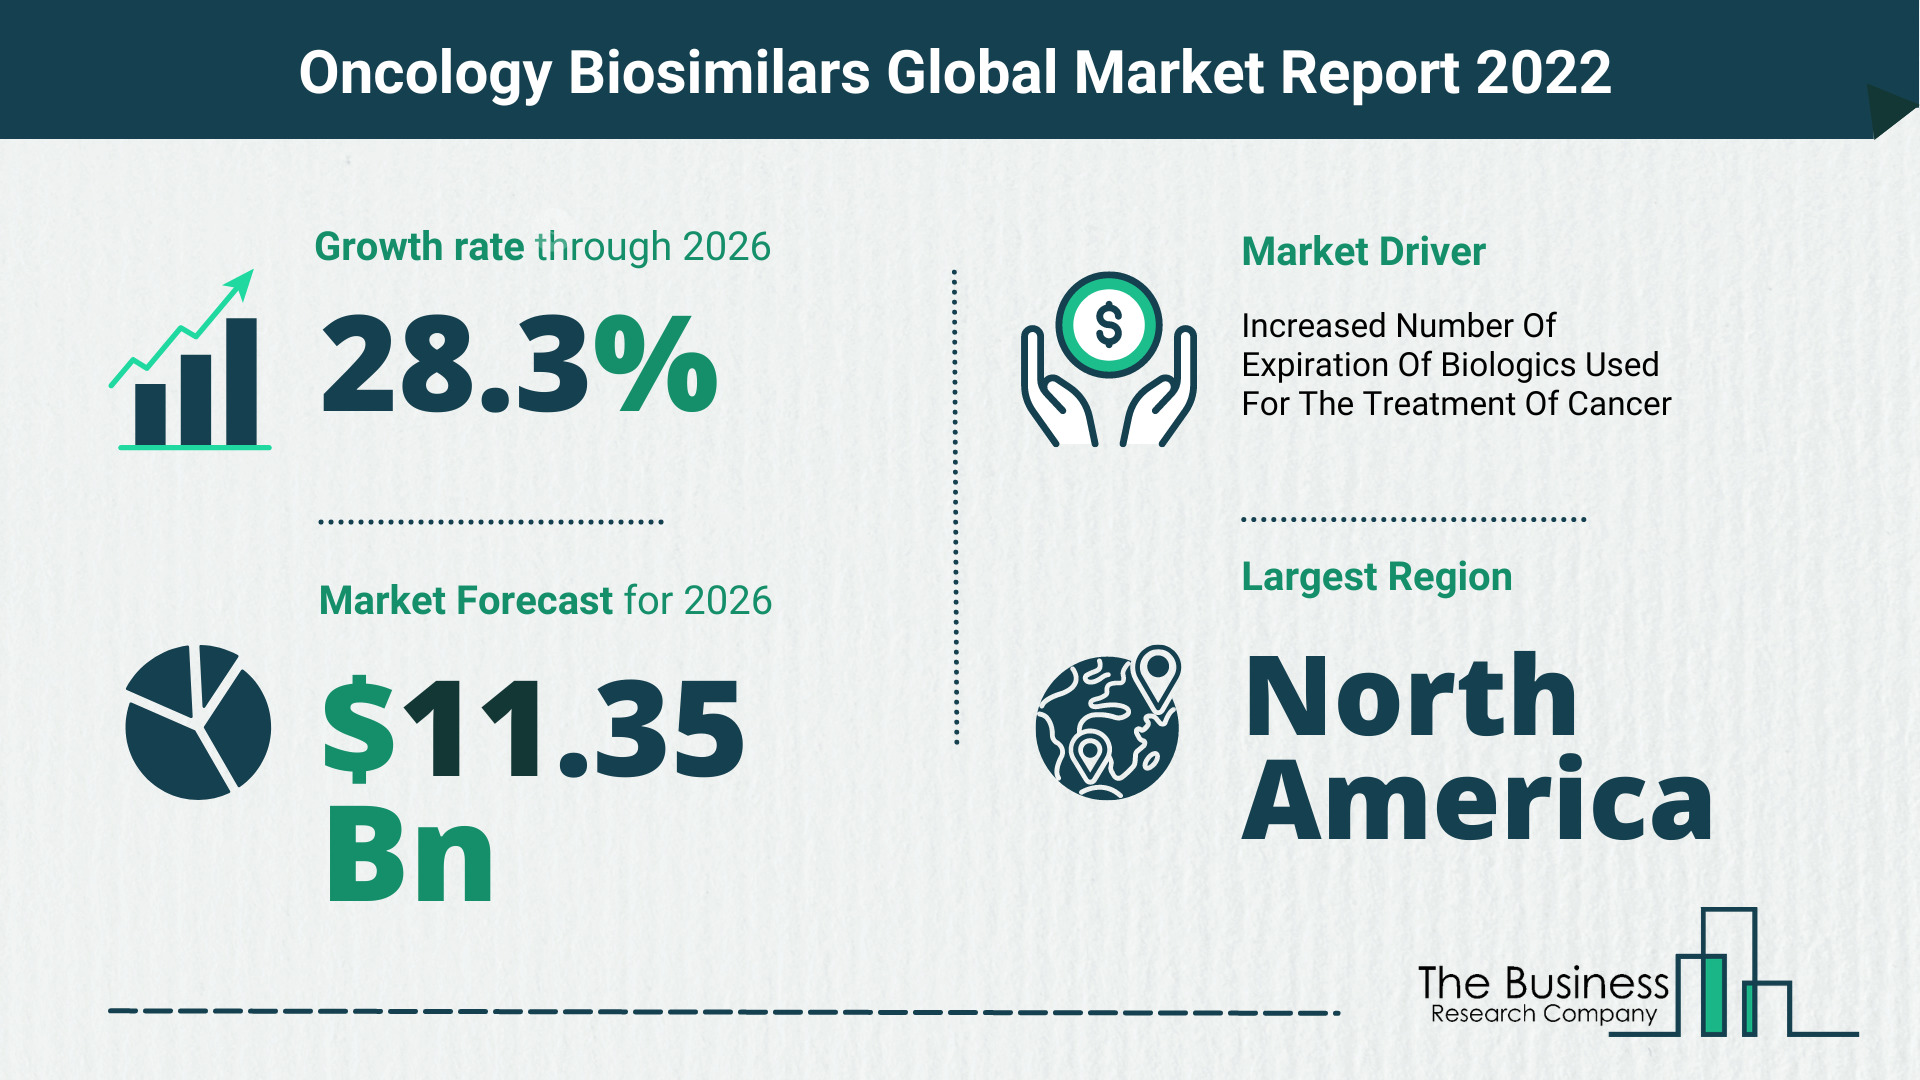 Global Oncology Biosimilars Market Size